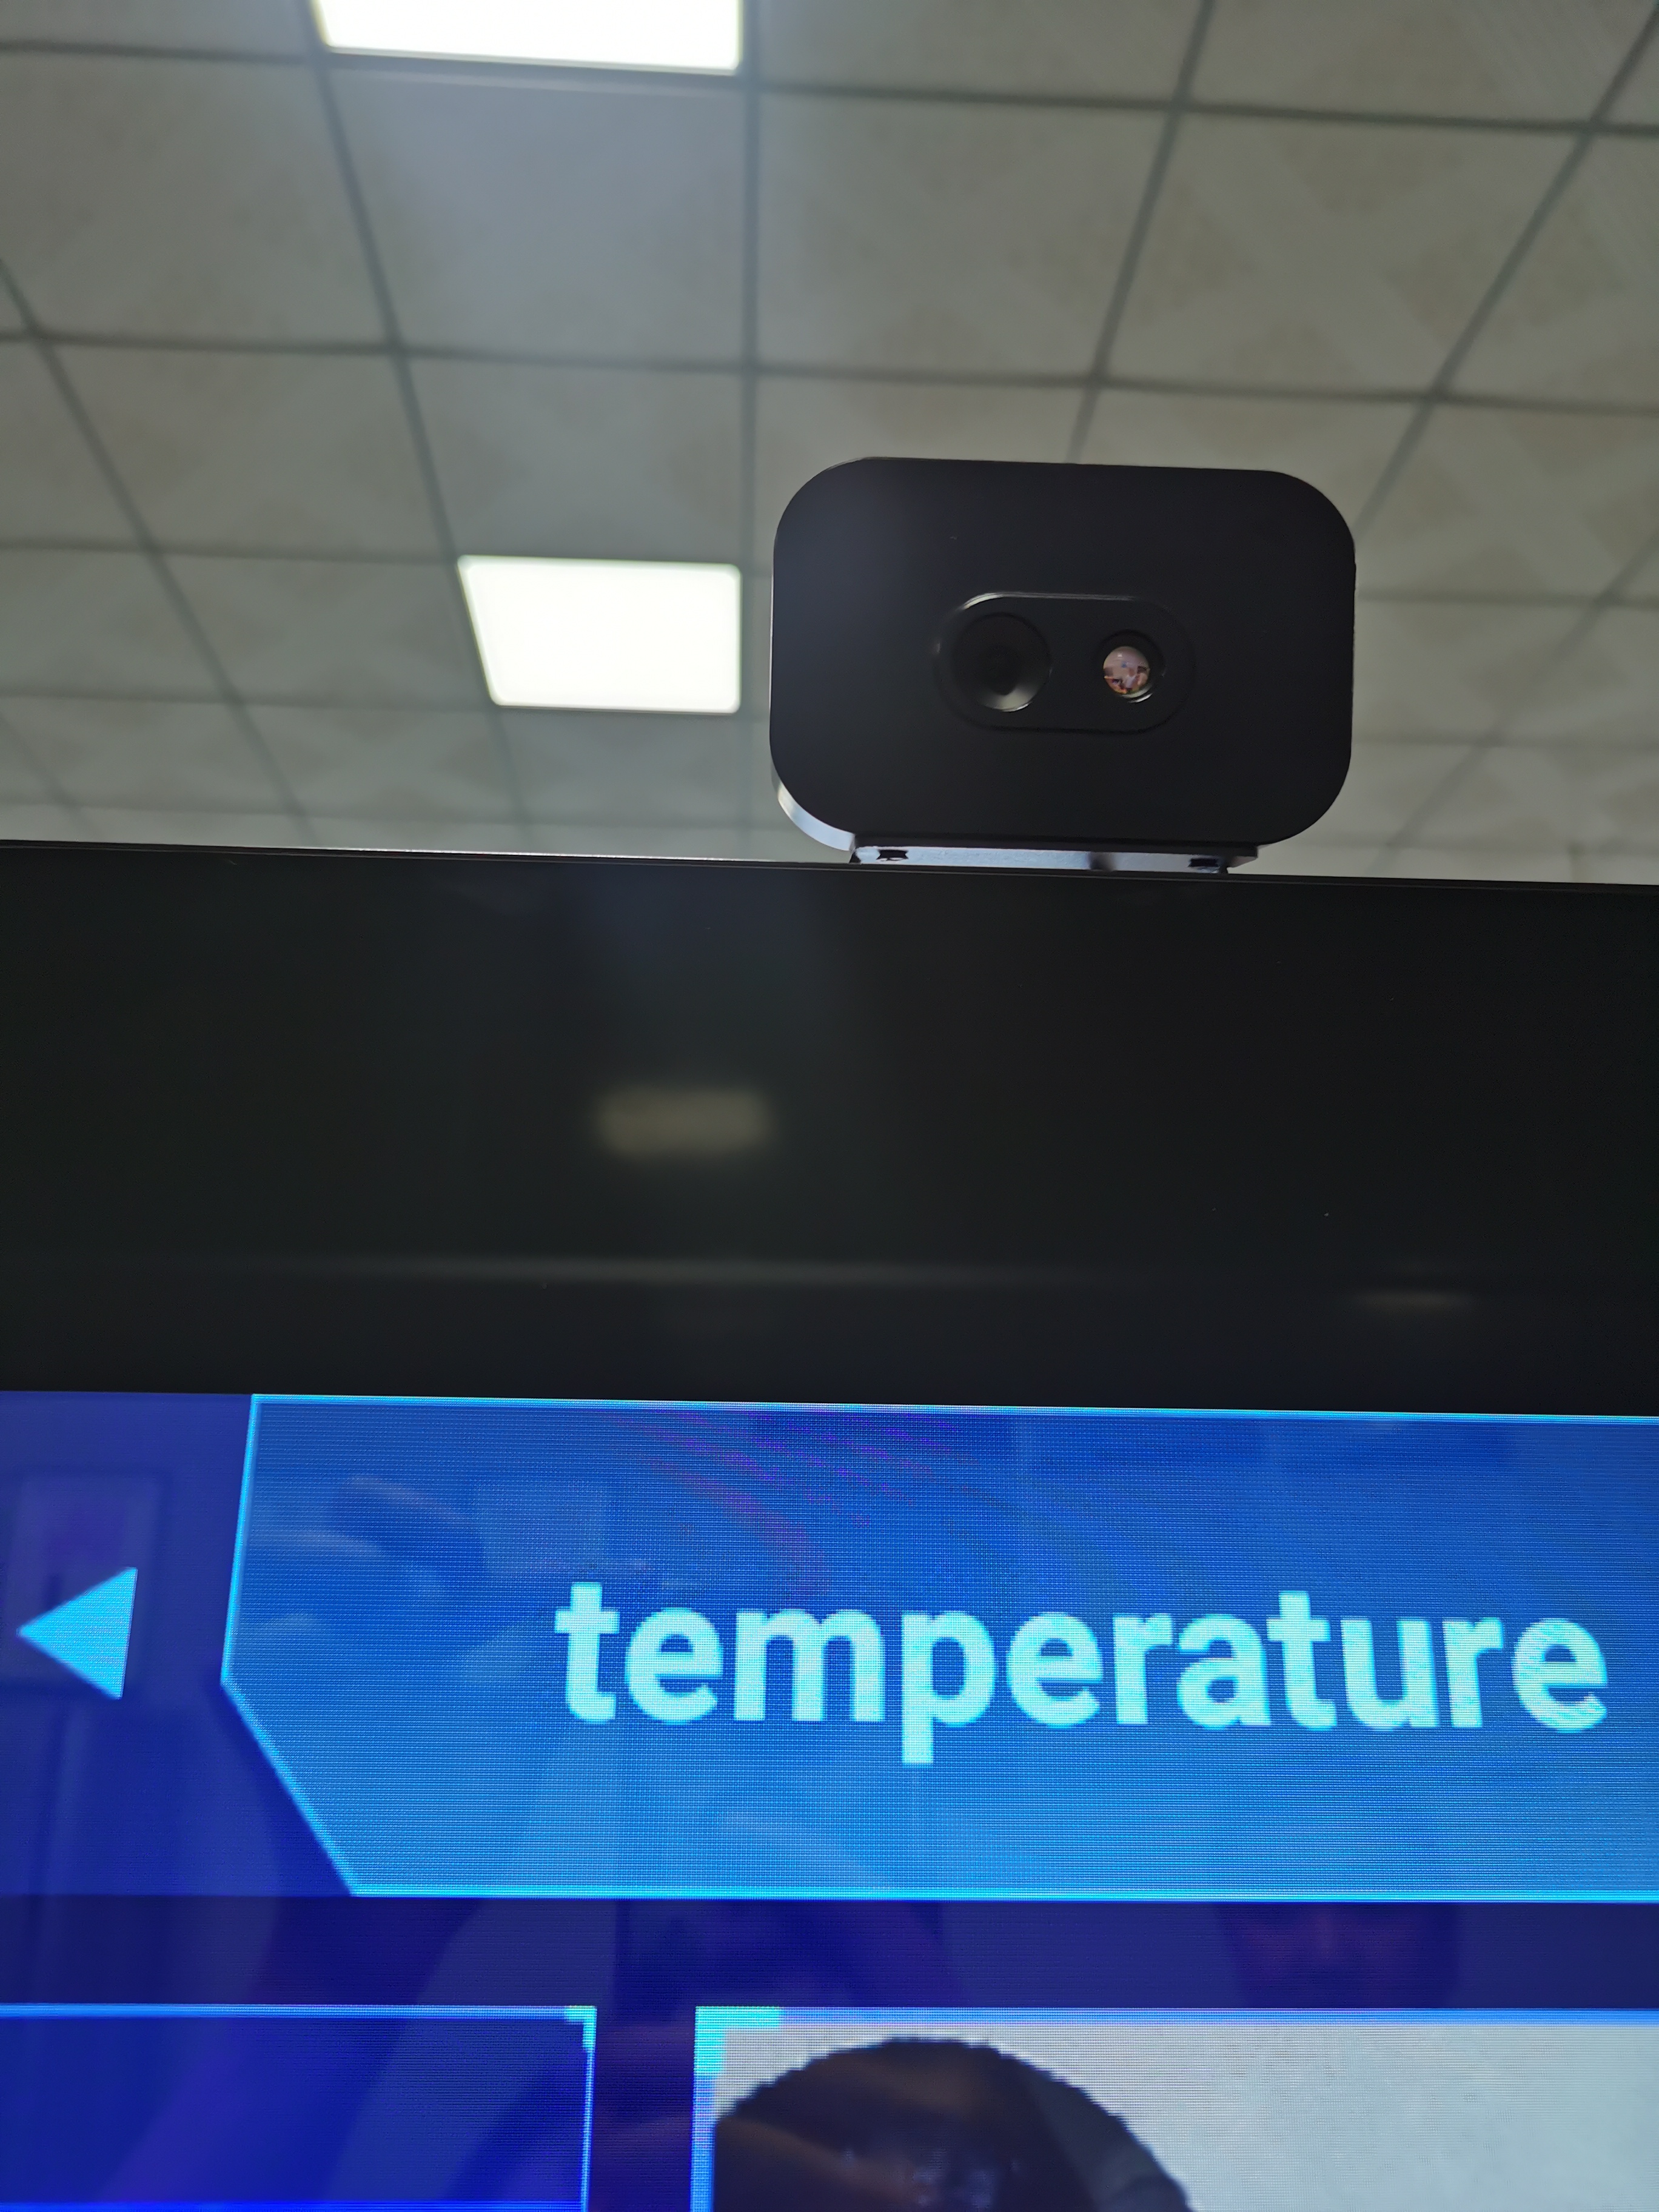 https://www.layson-display.com/43495565-inch-reclamespeler-met-temperatuurmeting-en-temperatuurscreening-scanner-kiosk-temperatuurmonitor-digital-signage-kiosk-product/